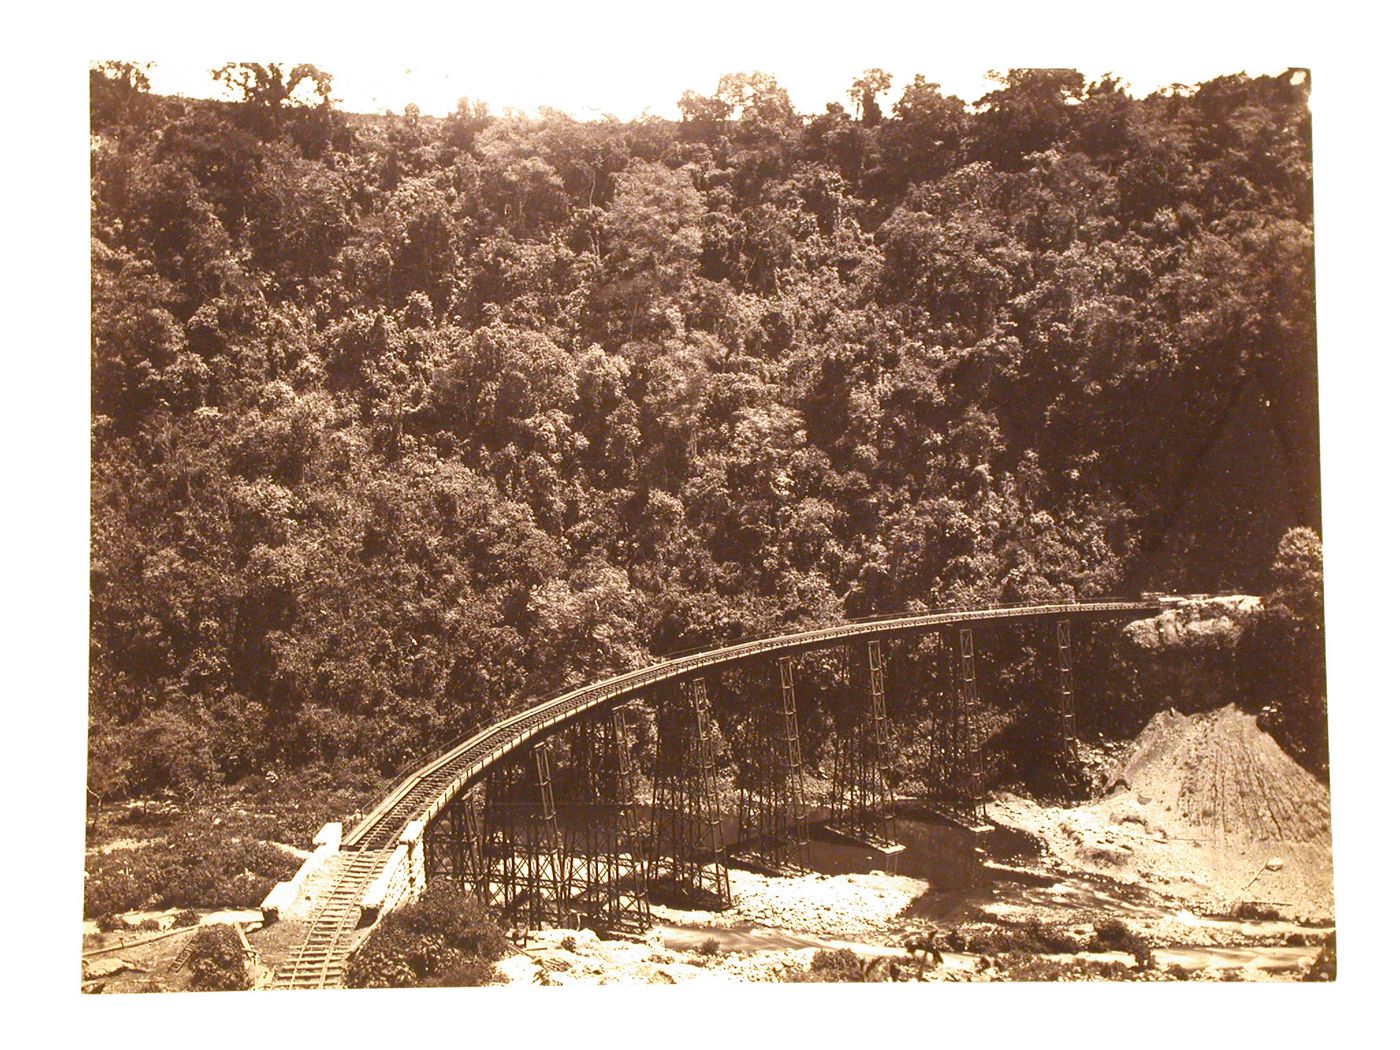 View of the railroad bridge over the Metlac Ravine, Veracruz-Llave, Mexico